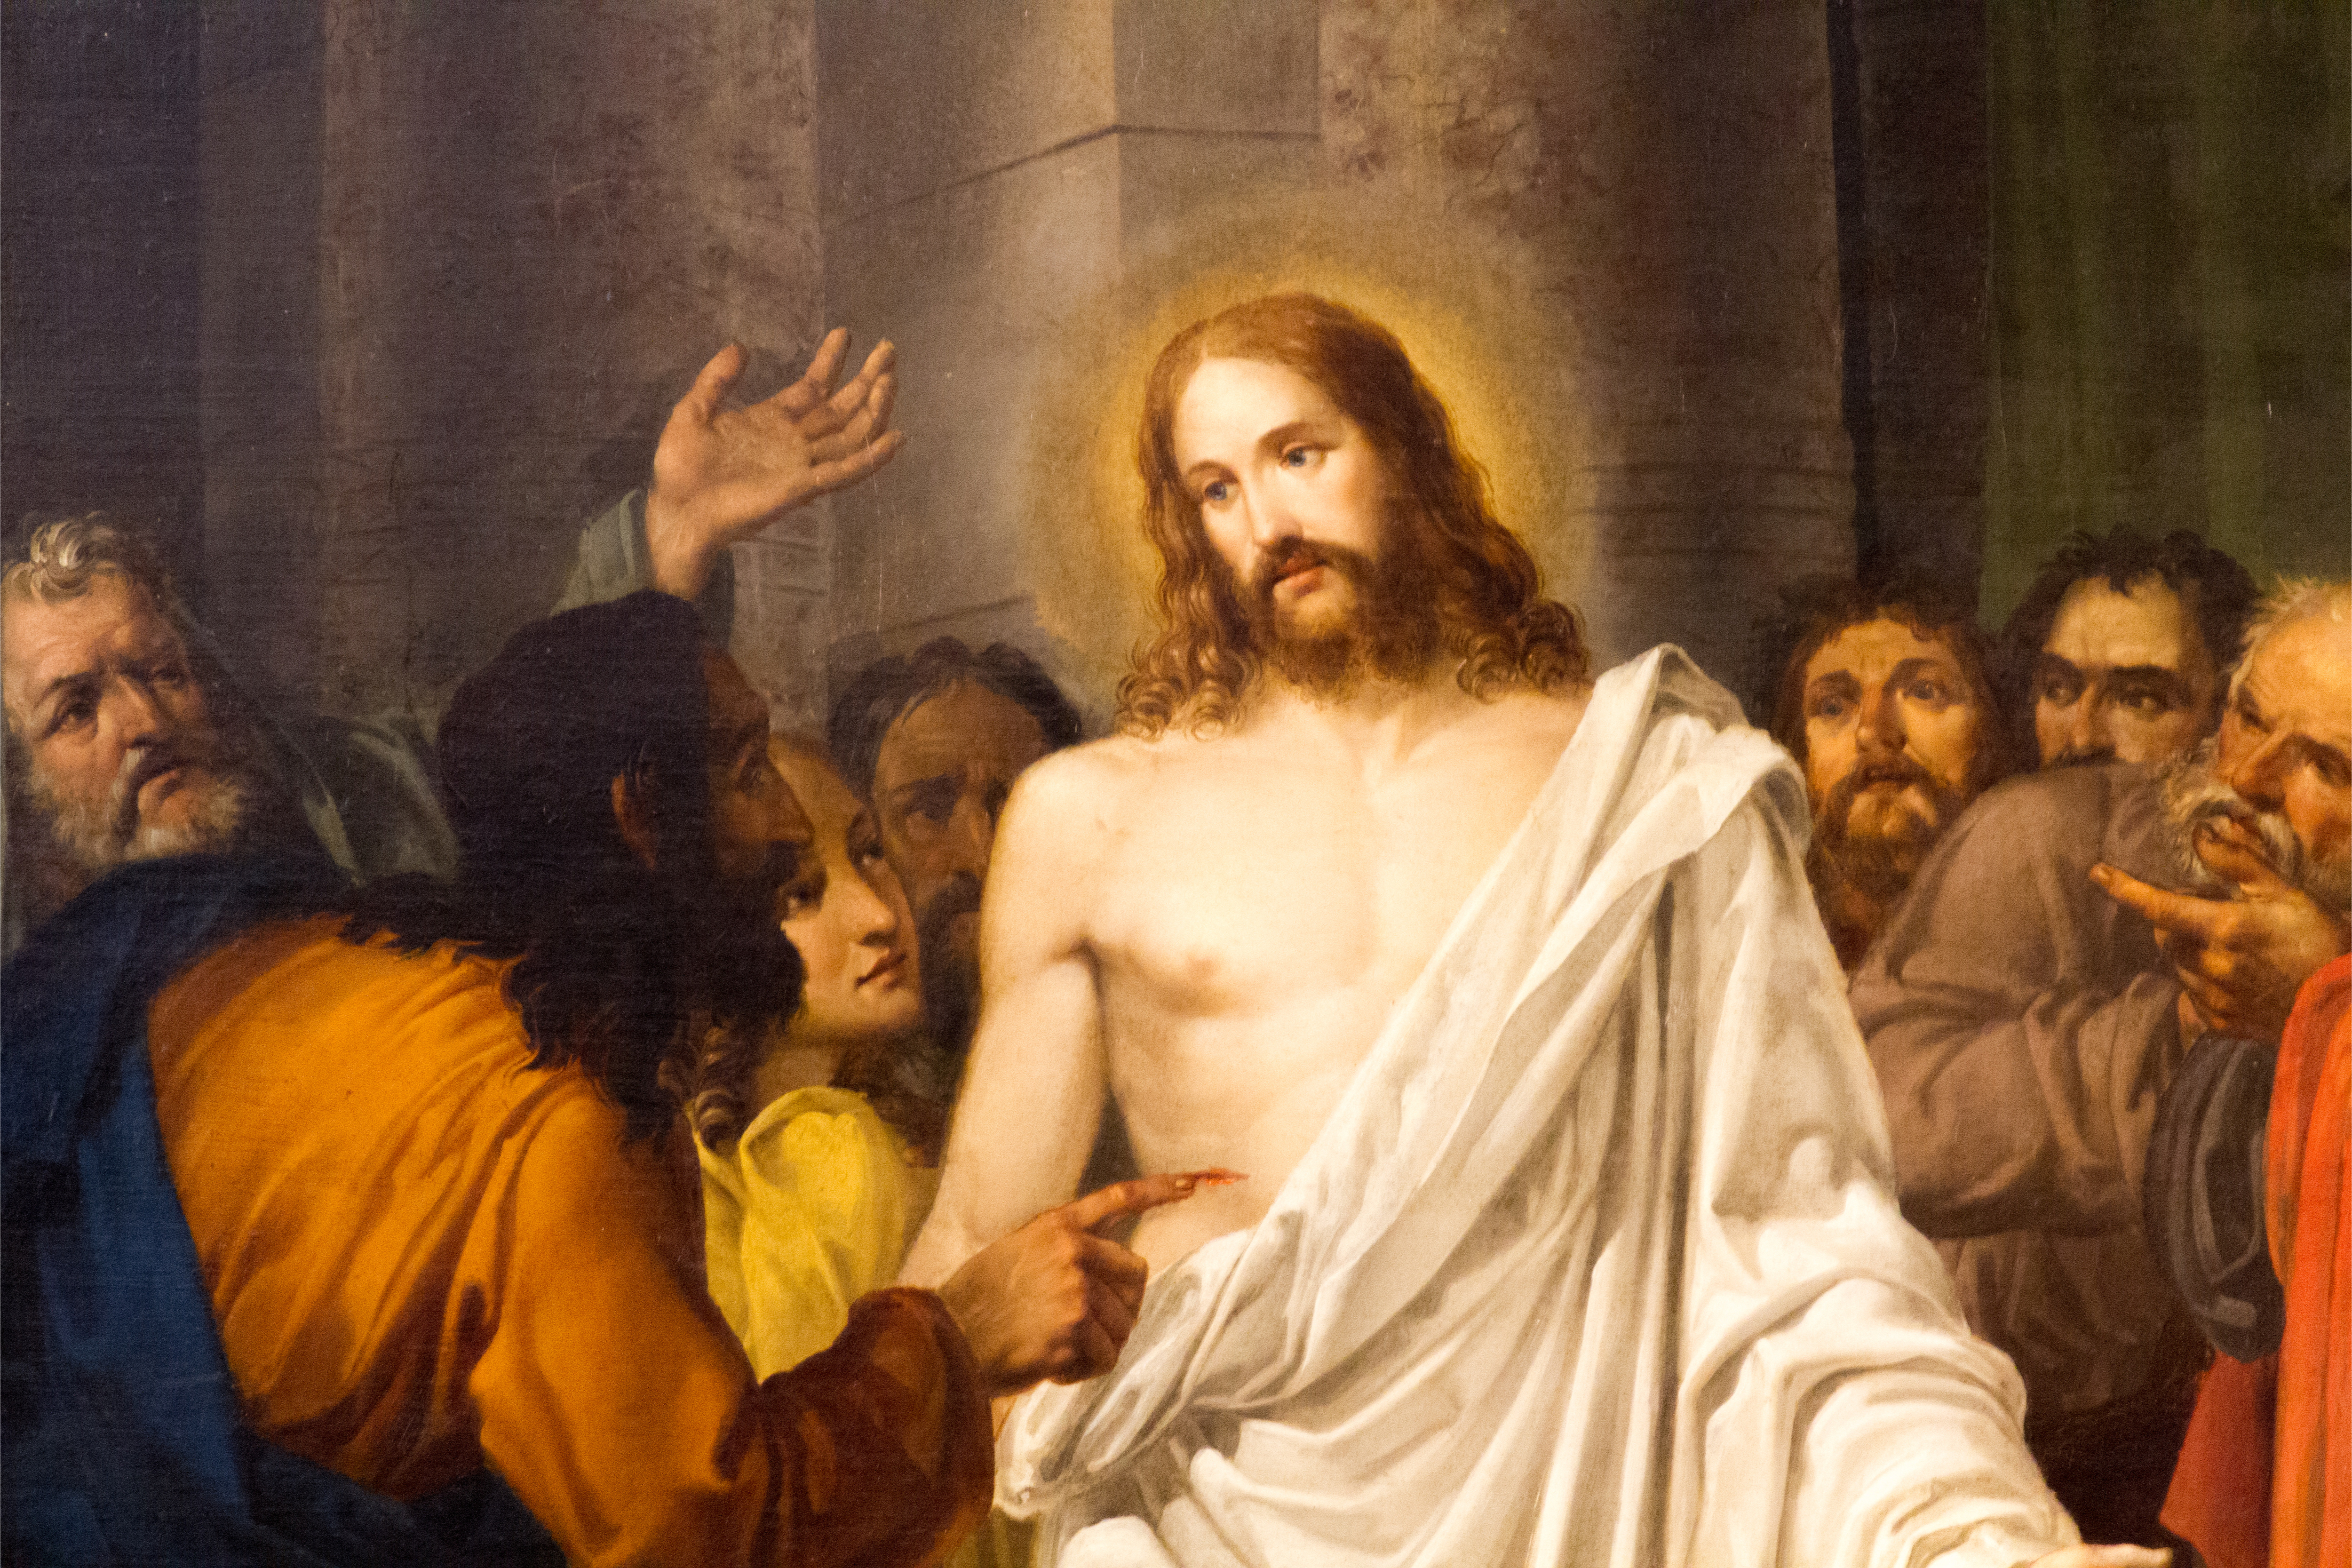 PAINTING OF RESURRECTED JESUS CHRIST EASTER